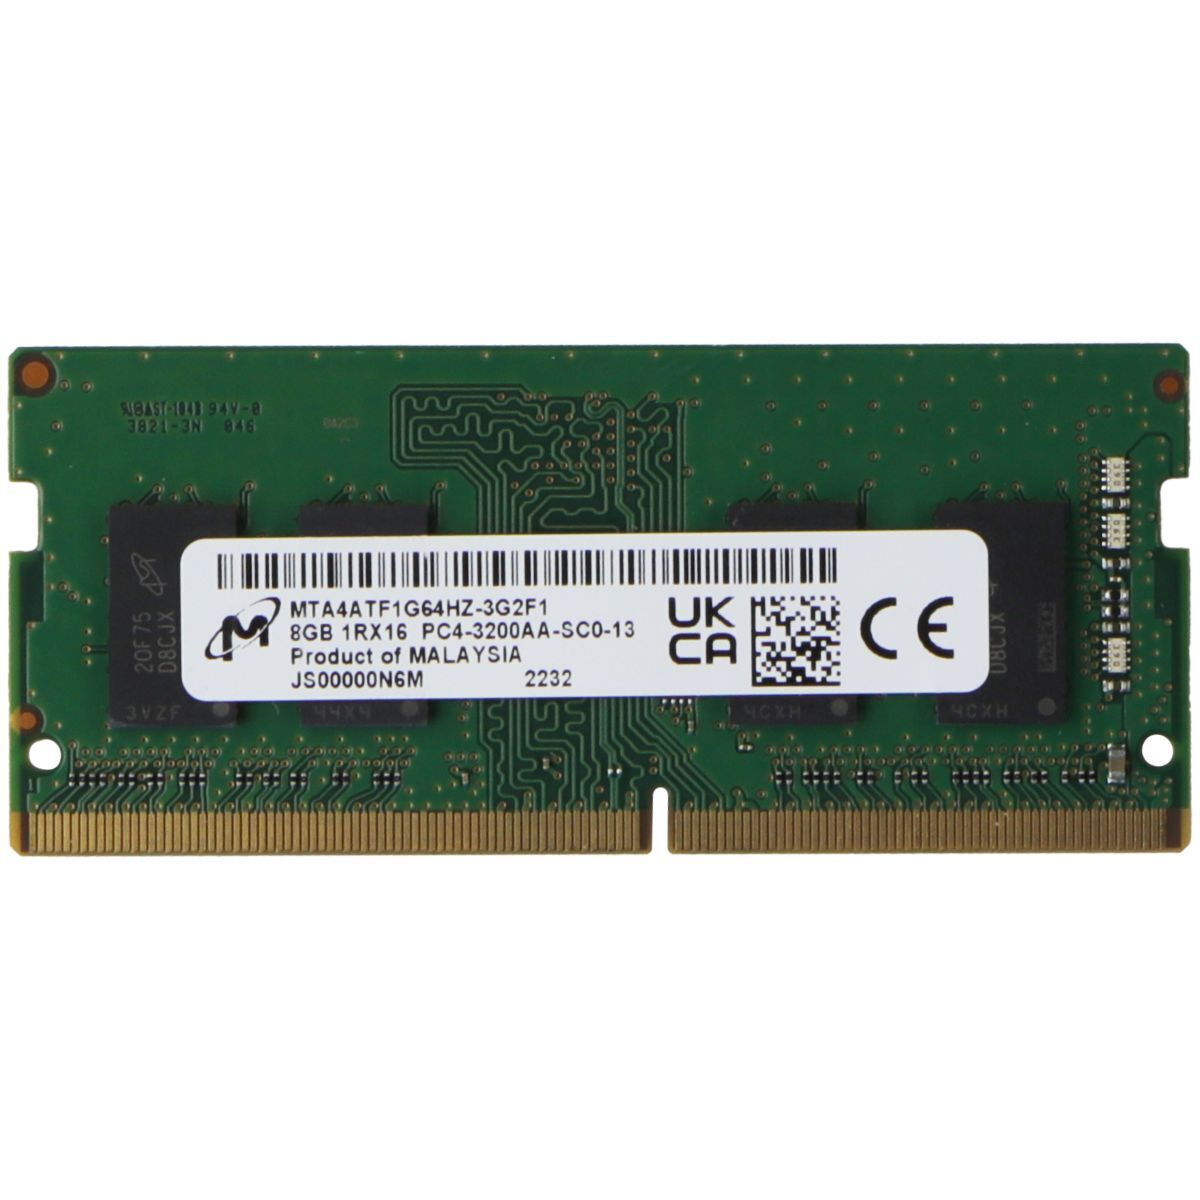 Micron (8GB) DDR4 1Rx16 (PC4-3200AA) Laptop RAM Memory MTA4ATF1G64HZ-3G2F1